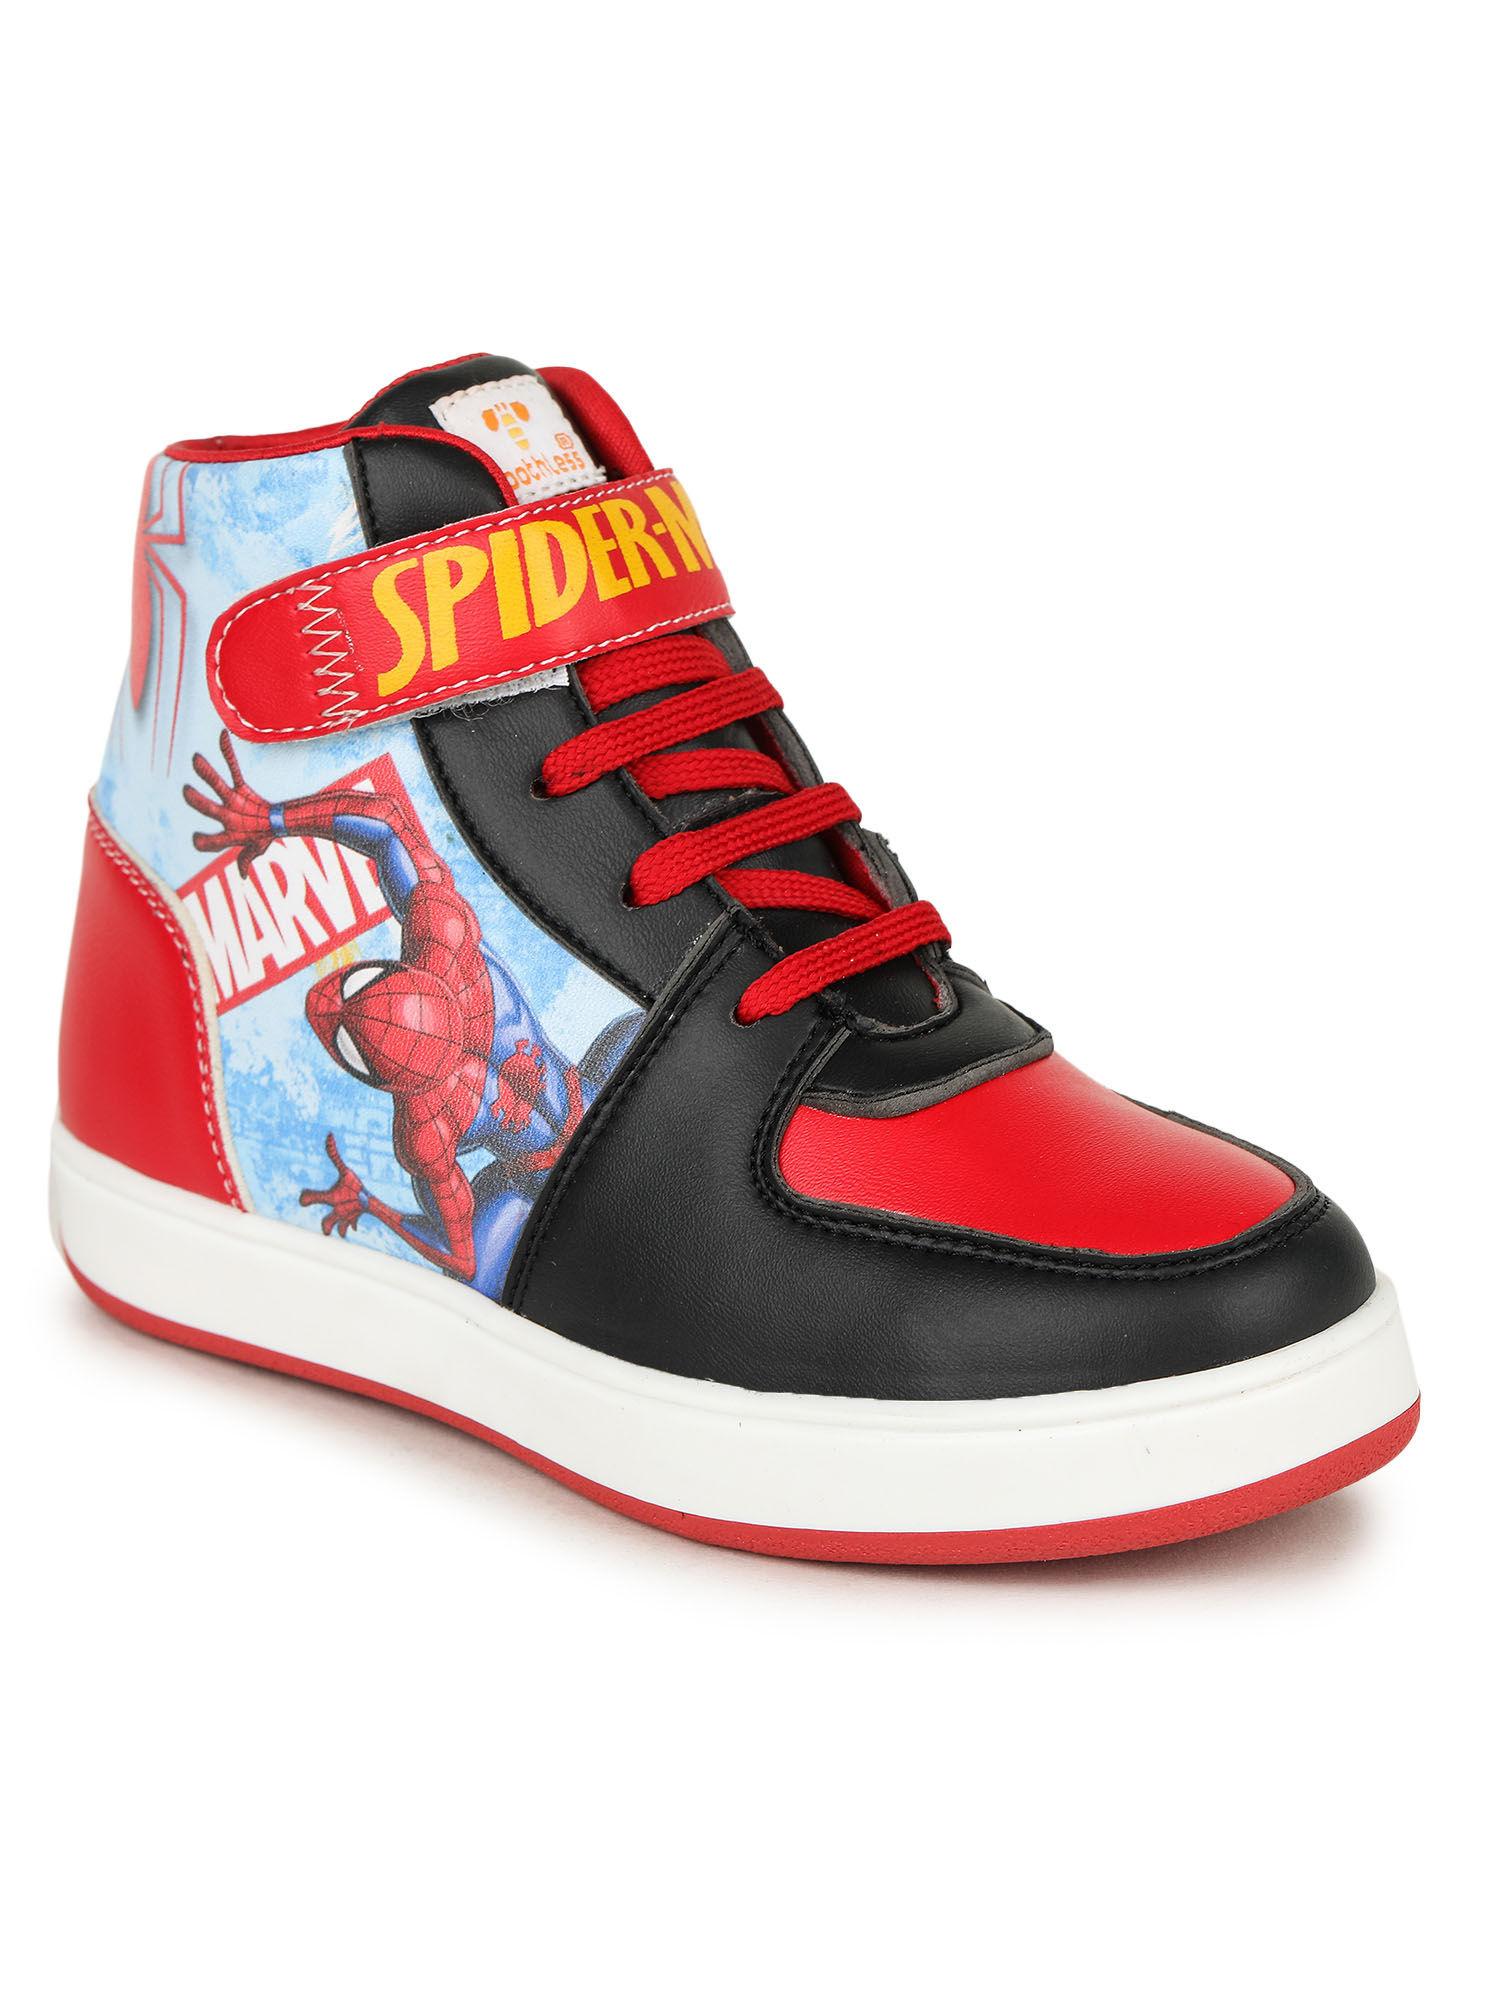 marvel spiderman by kids boys red sneakers